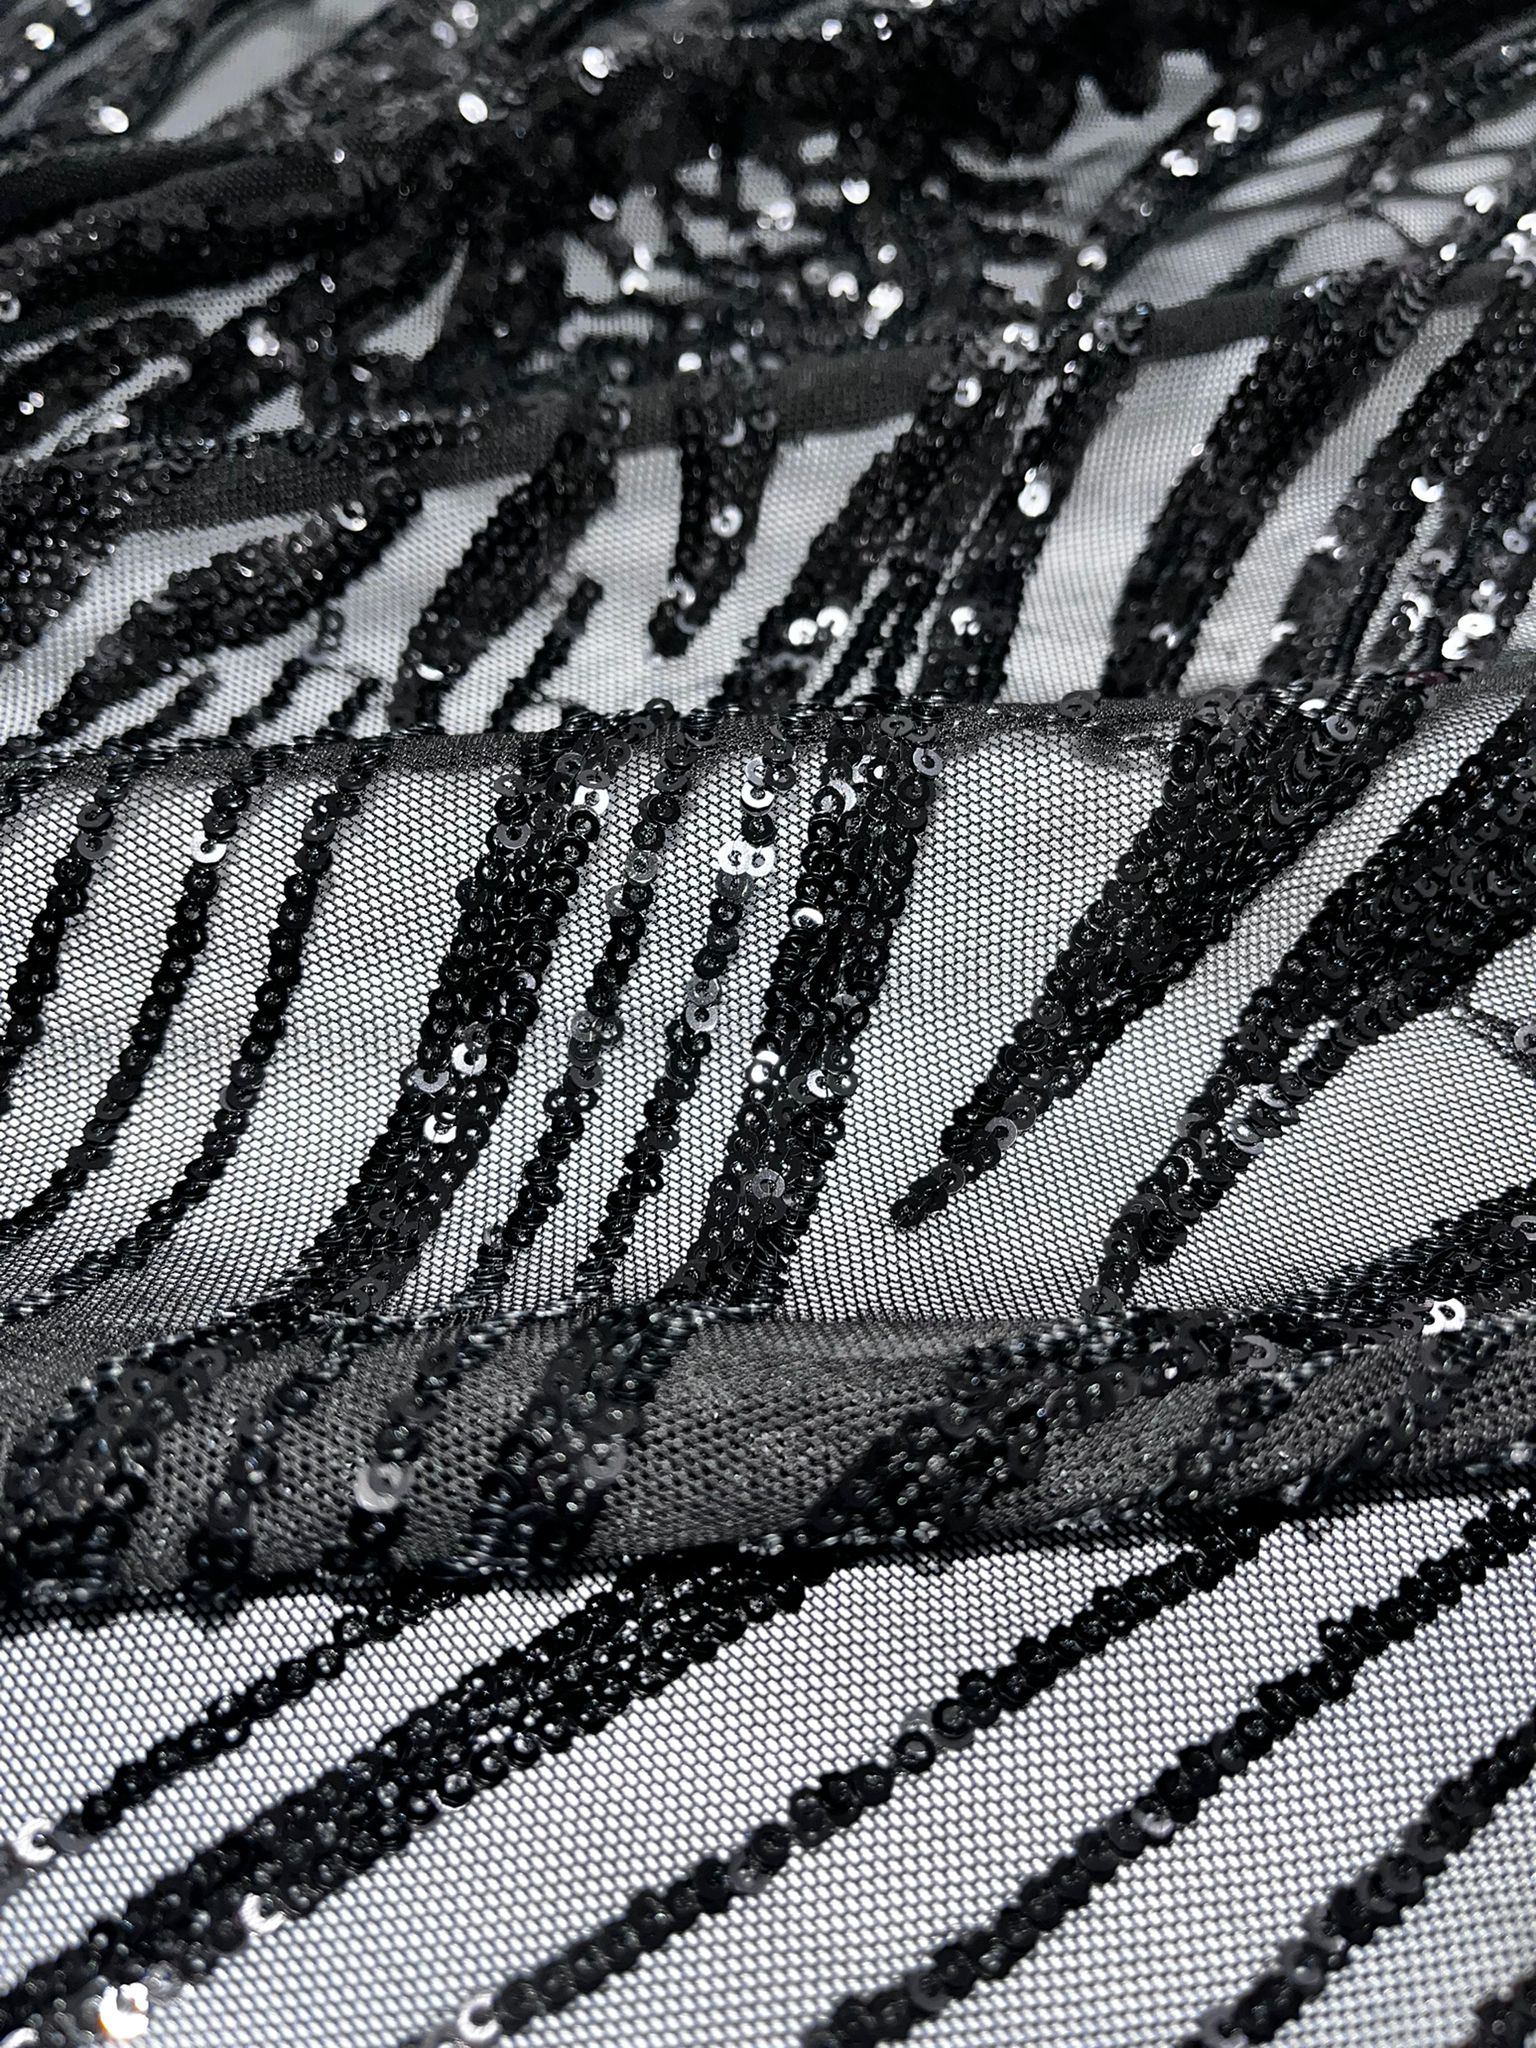 Geometric 4 Way Stretch Sequin Fabric | Black | Embroidered FabricICE FABRICSICE FABRICSSample (Swatch)Geometric 4 Way Stretch Sequin Fabric | Black | Embroidered Fabric ICE FABRICS